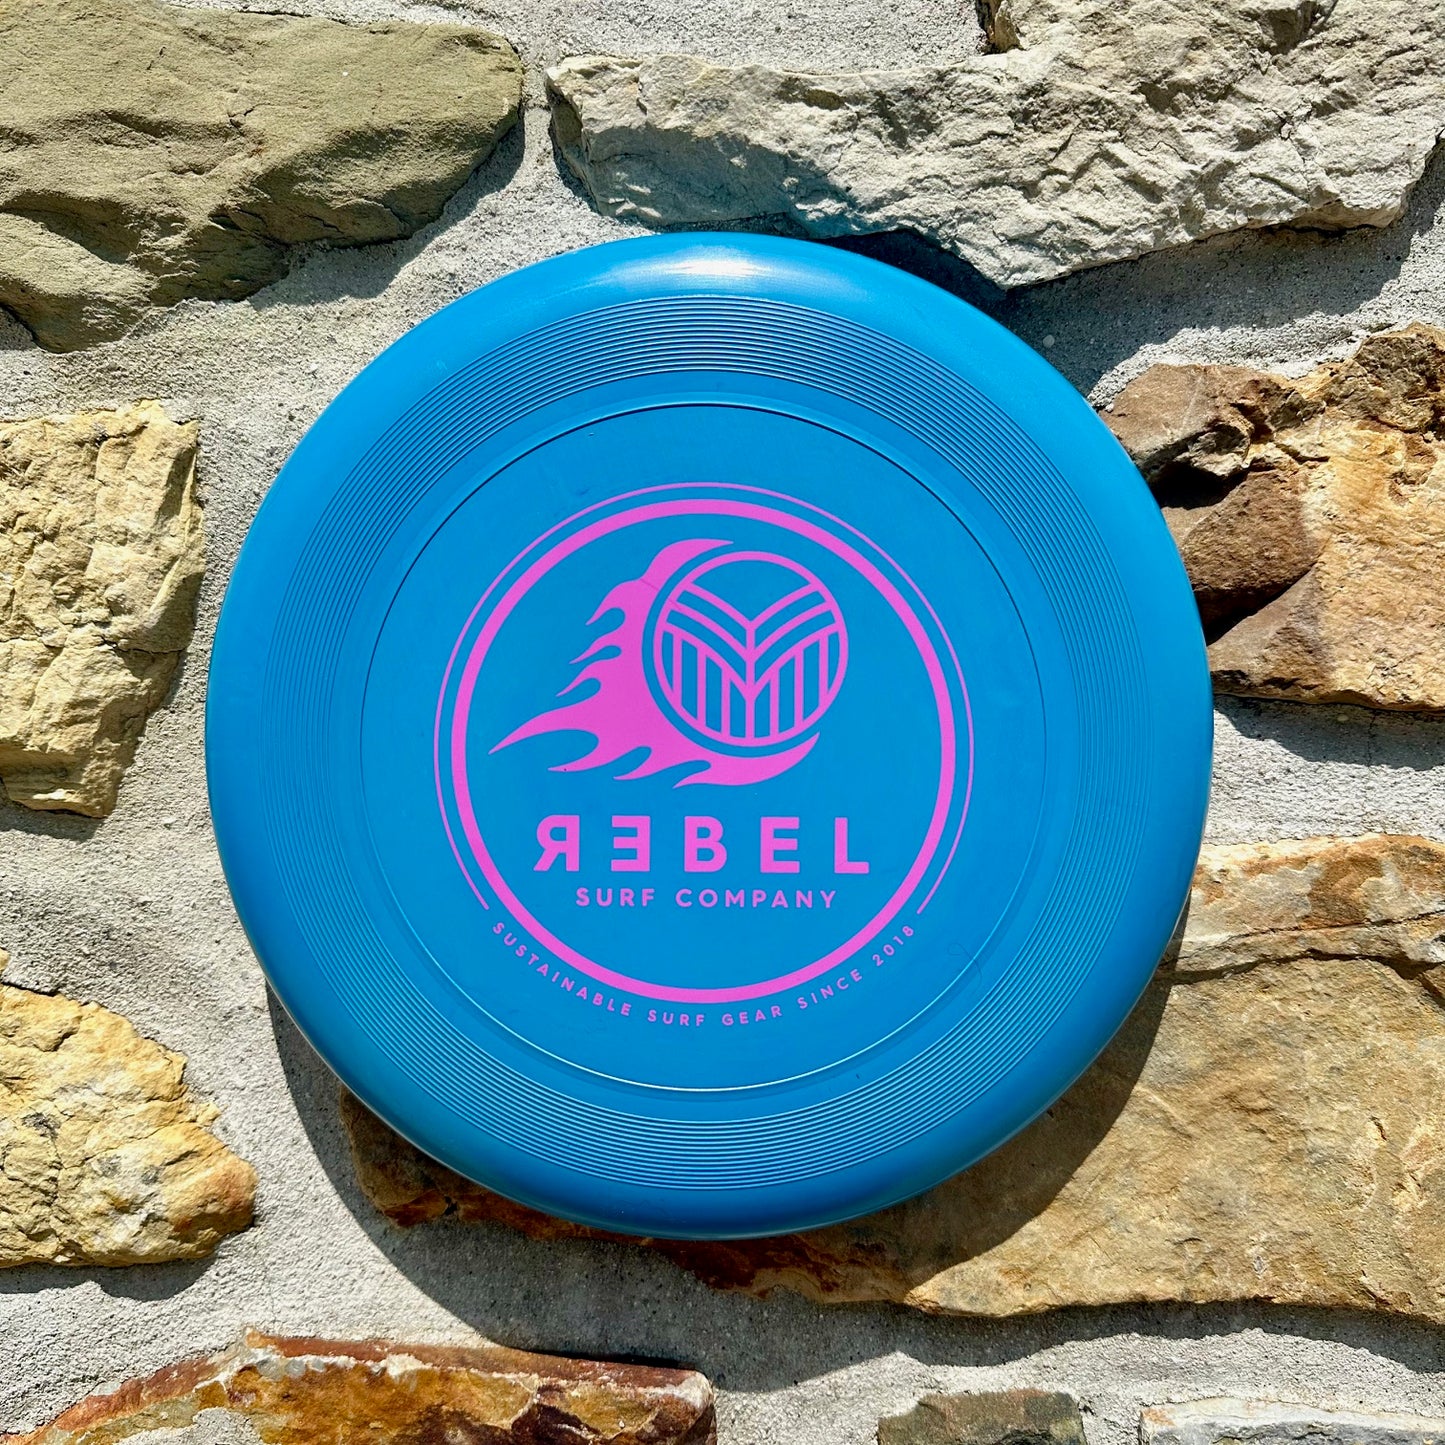 Frisbee, D= 27,5 cm